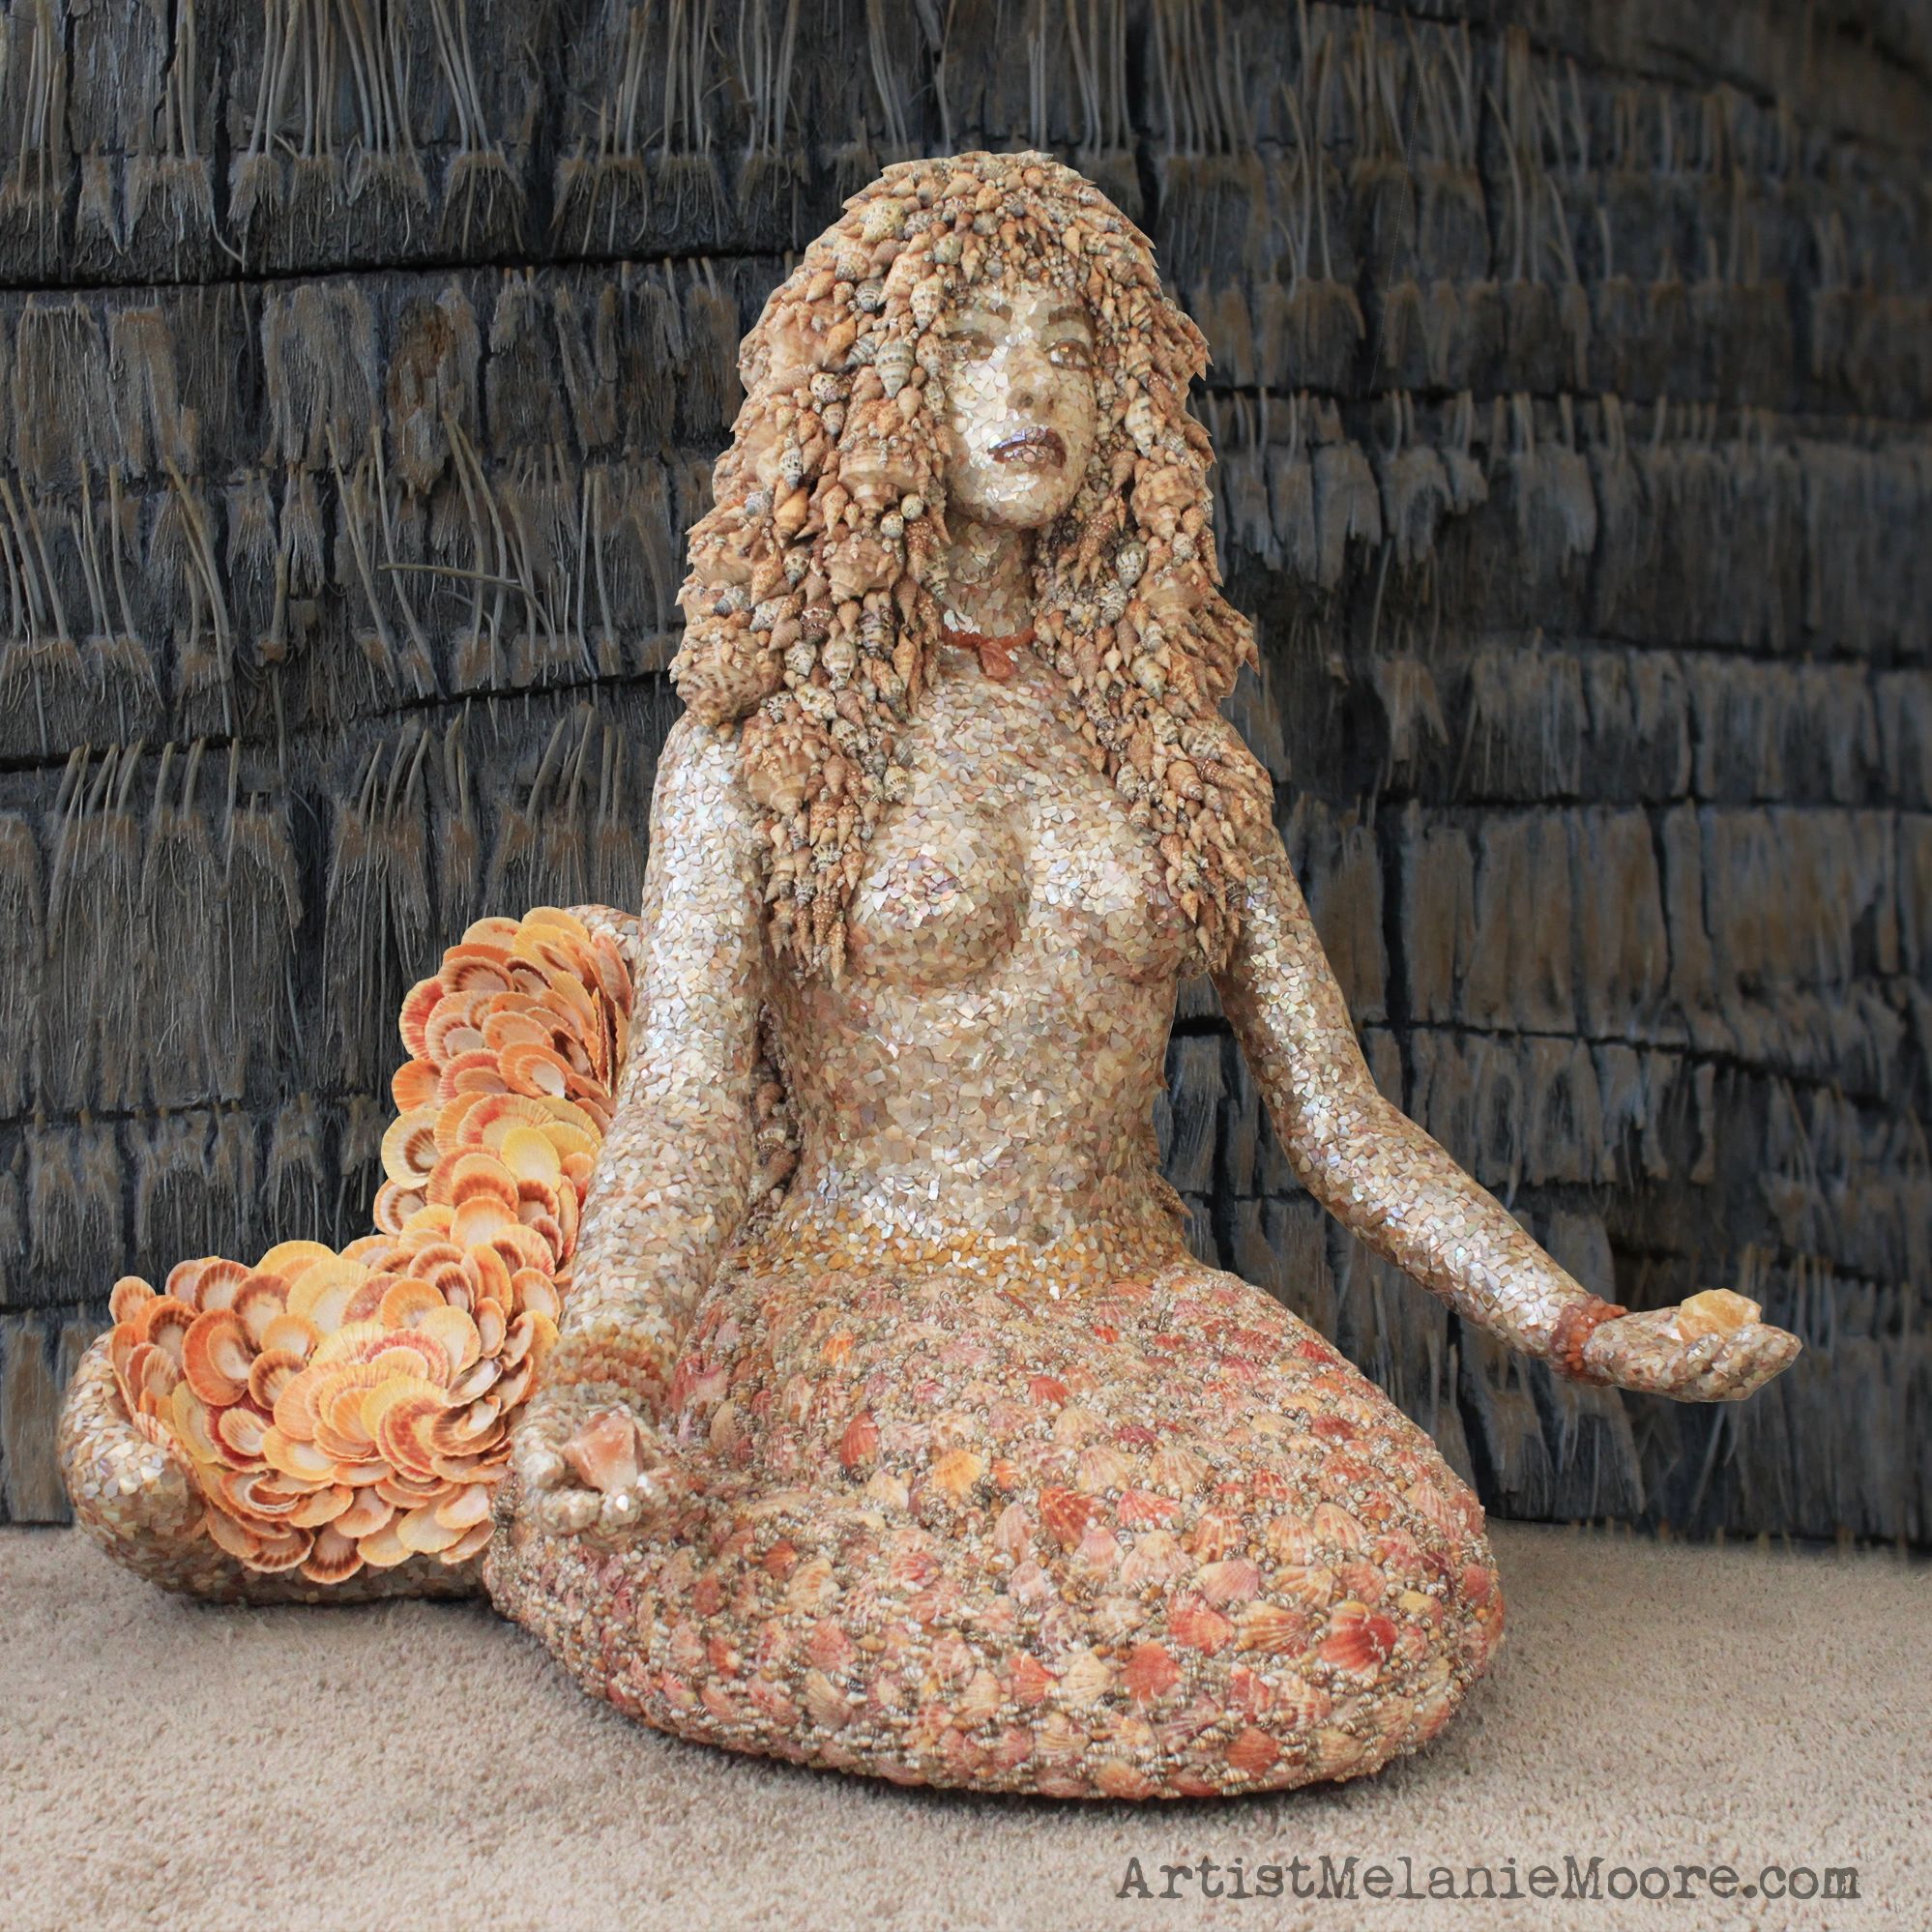 Mosaic seashell mermaid made from natural seashells and crystals by artist Melanie Moore.